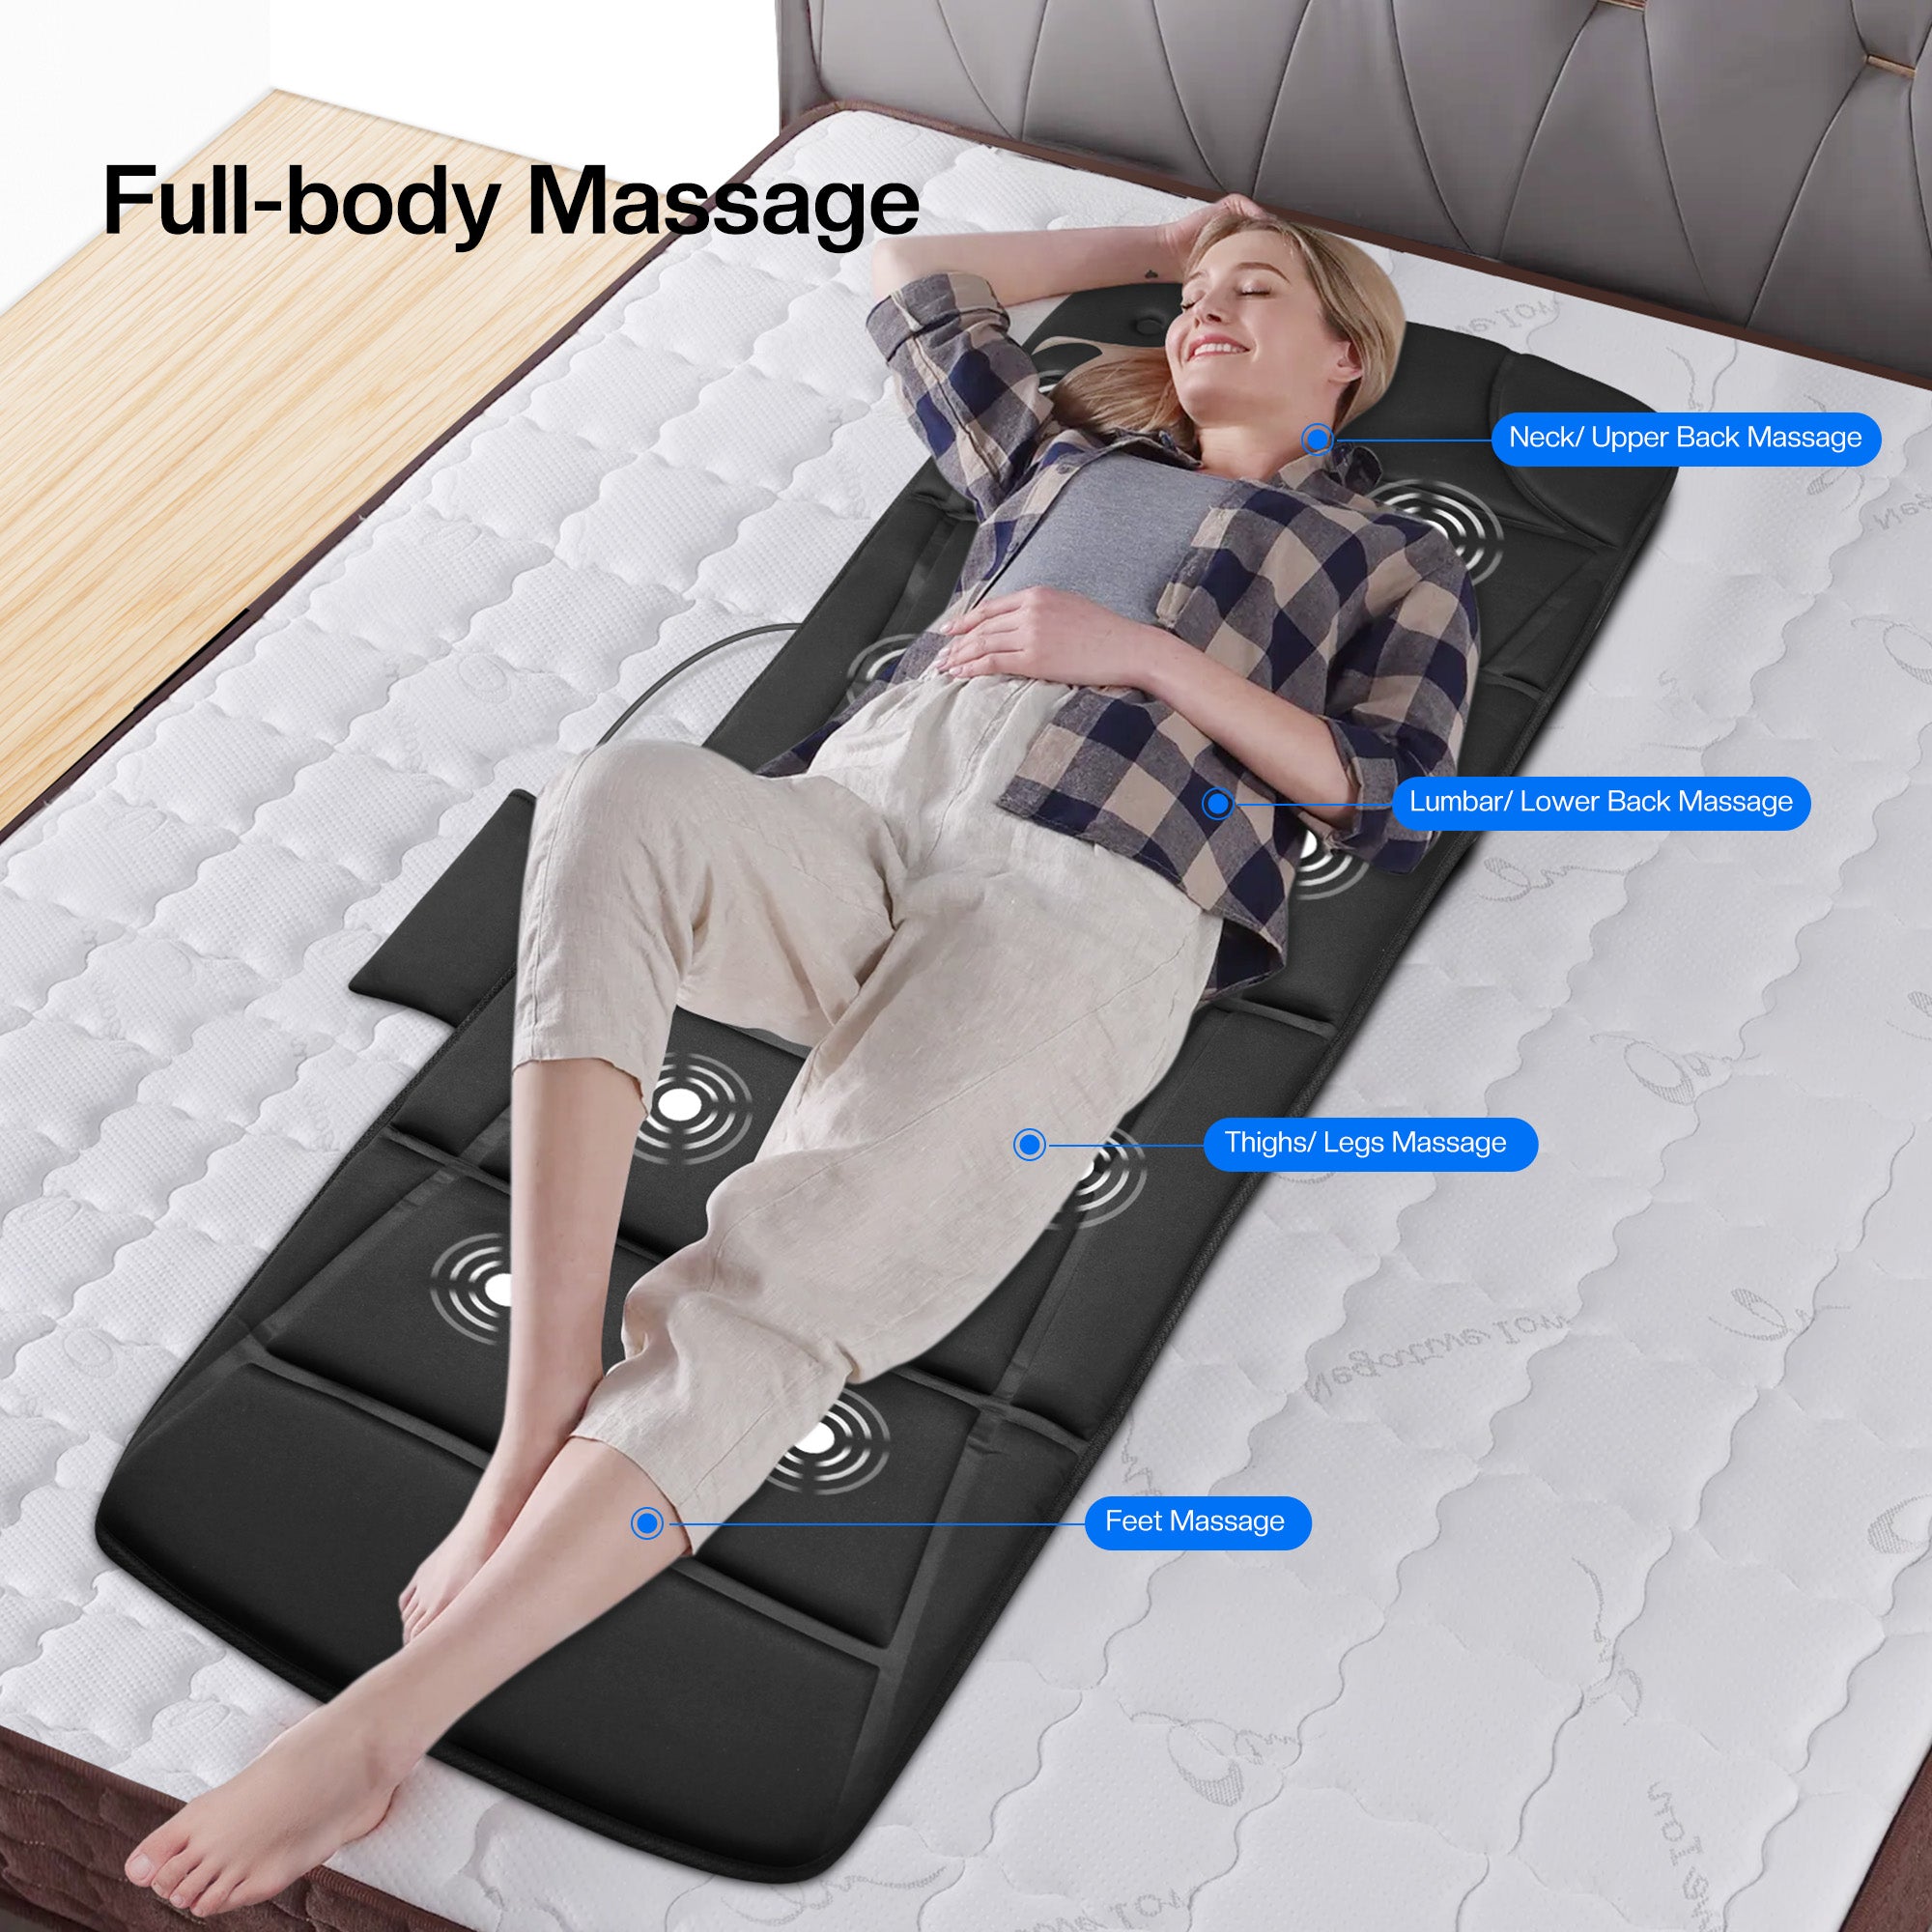 CILI Full Body Massage Mat 10 Vibration Massage Motors with Heating for Back, Shoulder, Leg, Gifts for Men Women, Mom Dad, Black-CL-3701